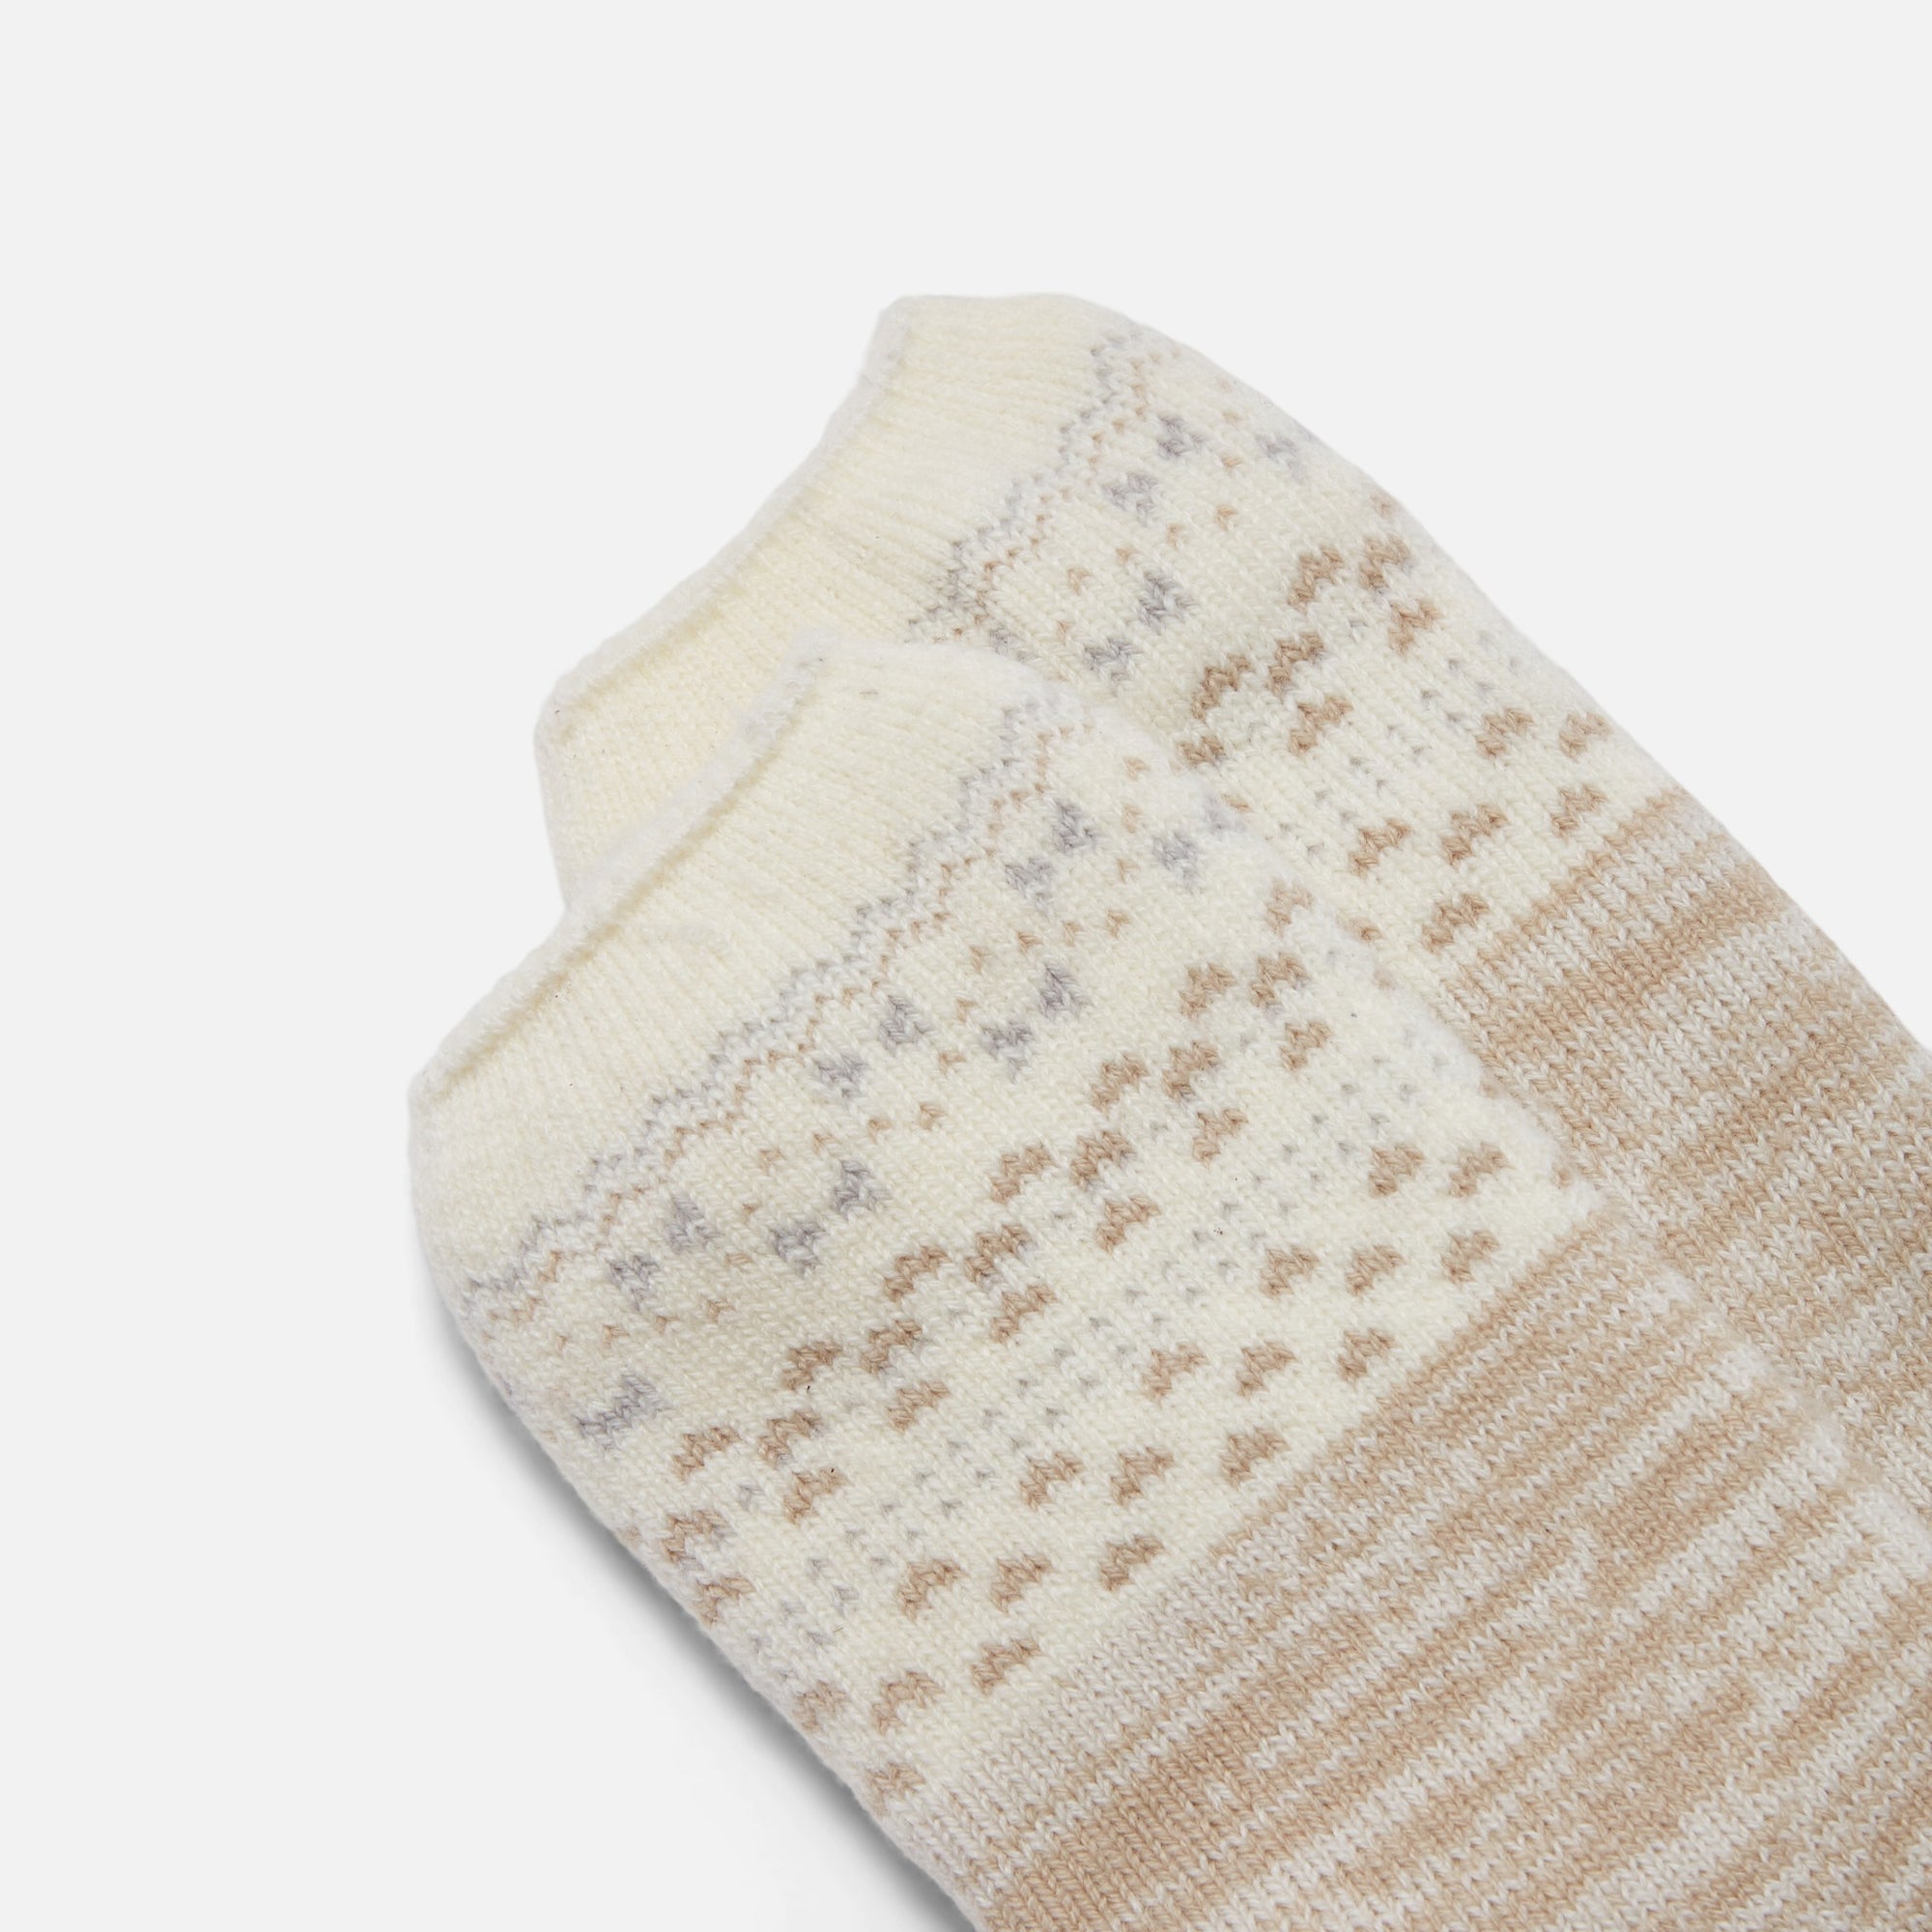 Beige slipper socks with norwegian pattern